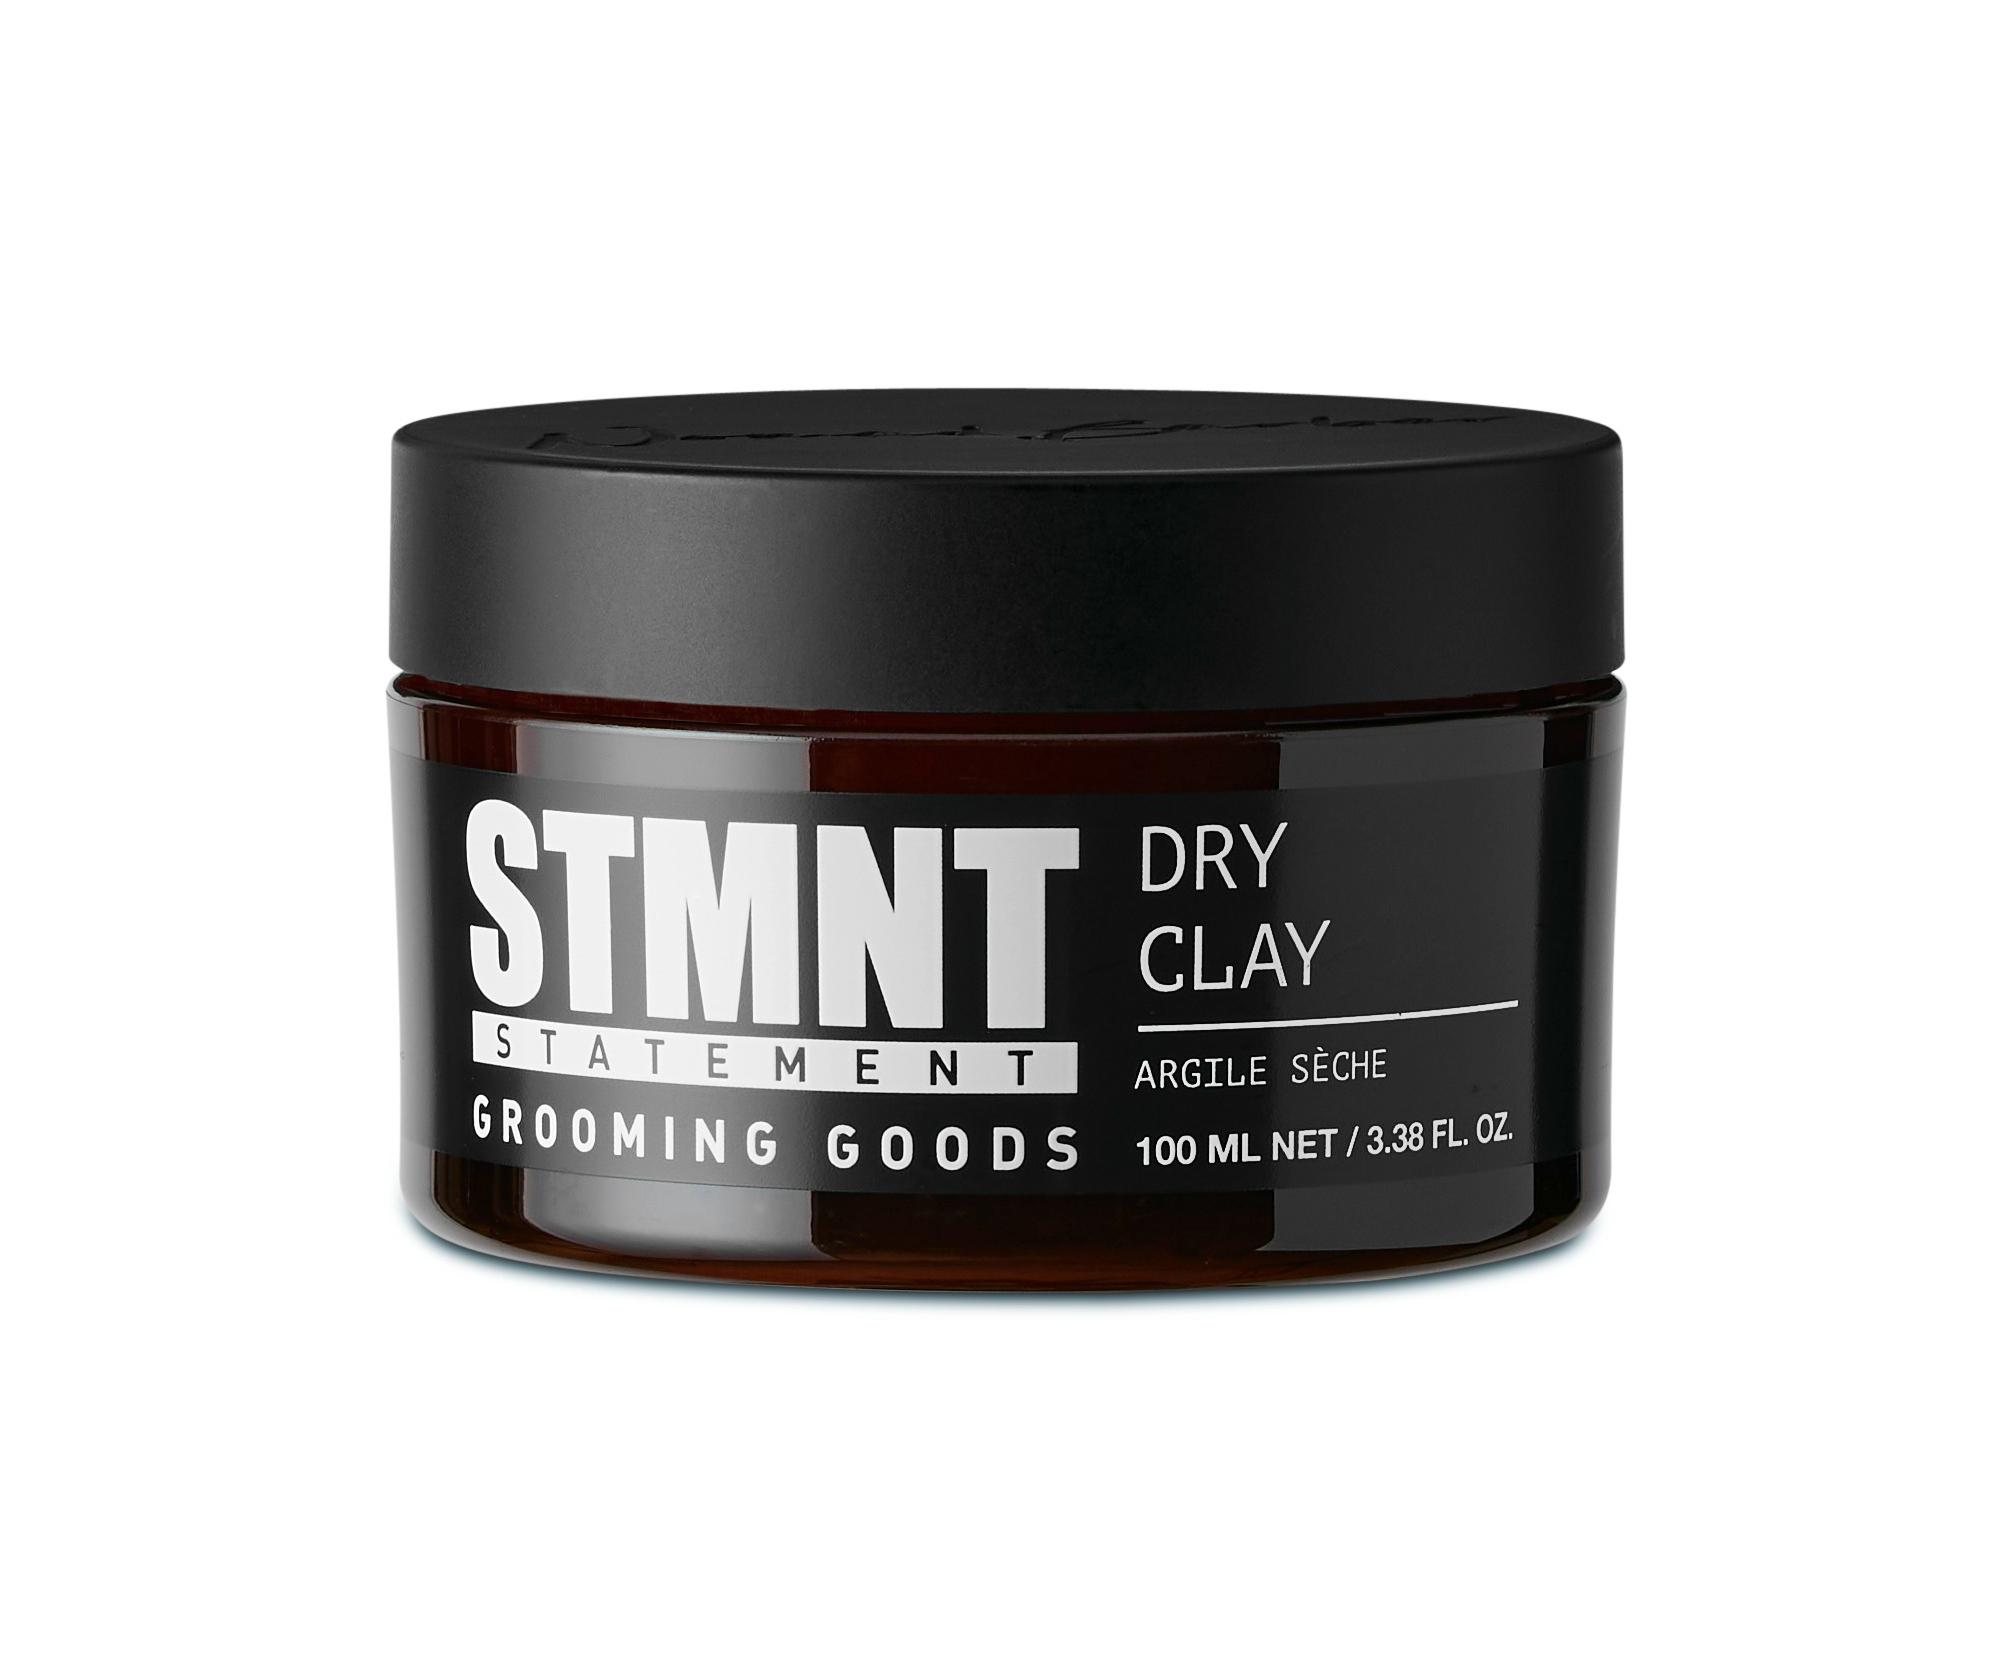 Suchý jíl pro matný vzhled vlasů STMNT Dry Clay - 100 ml (2888957) + dárek zdarma